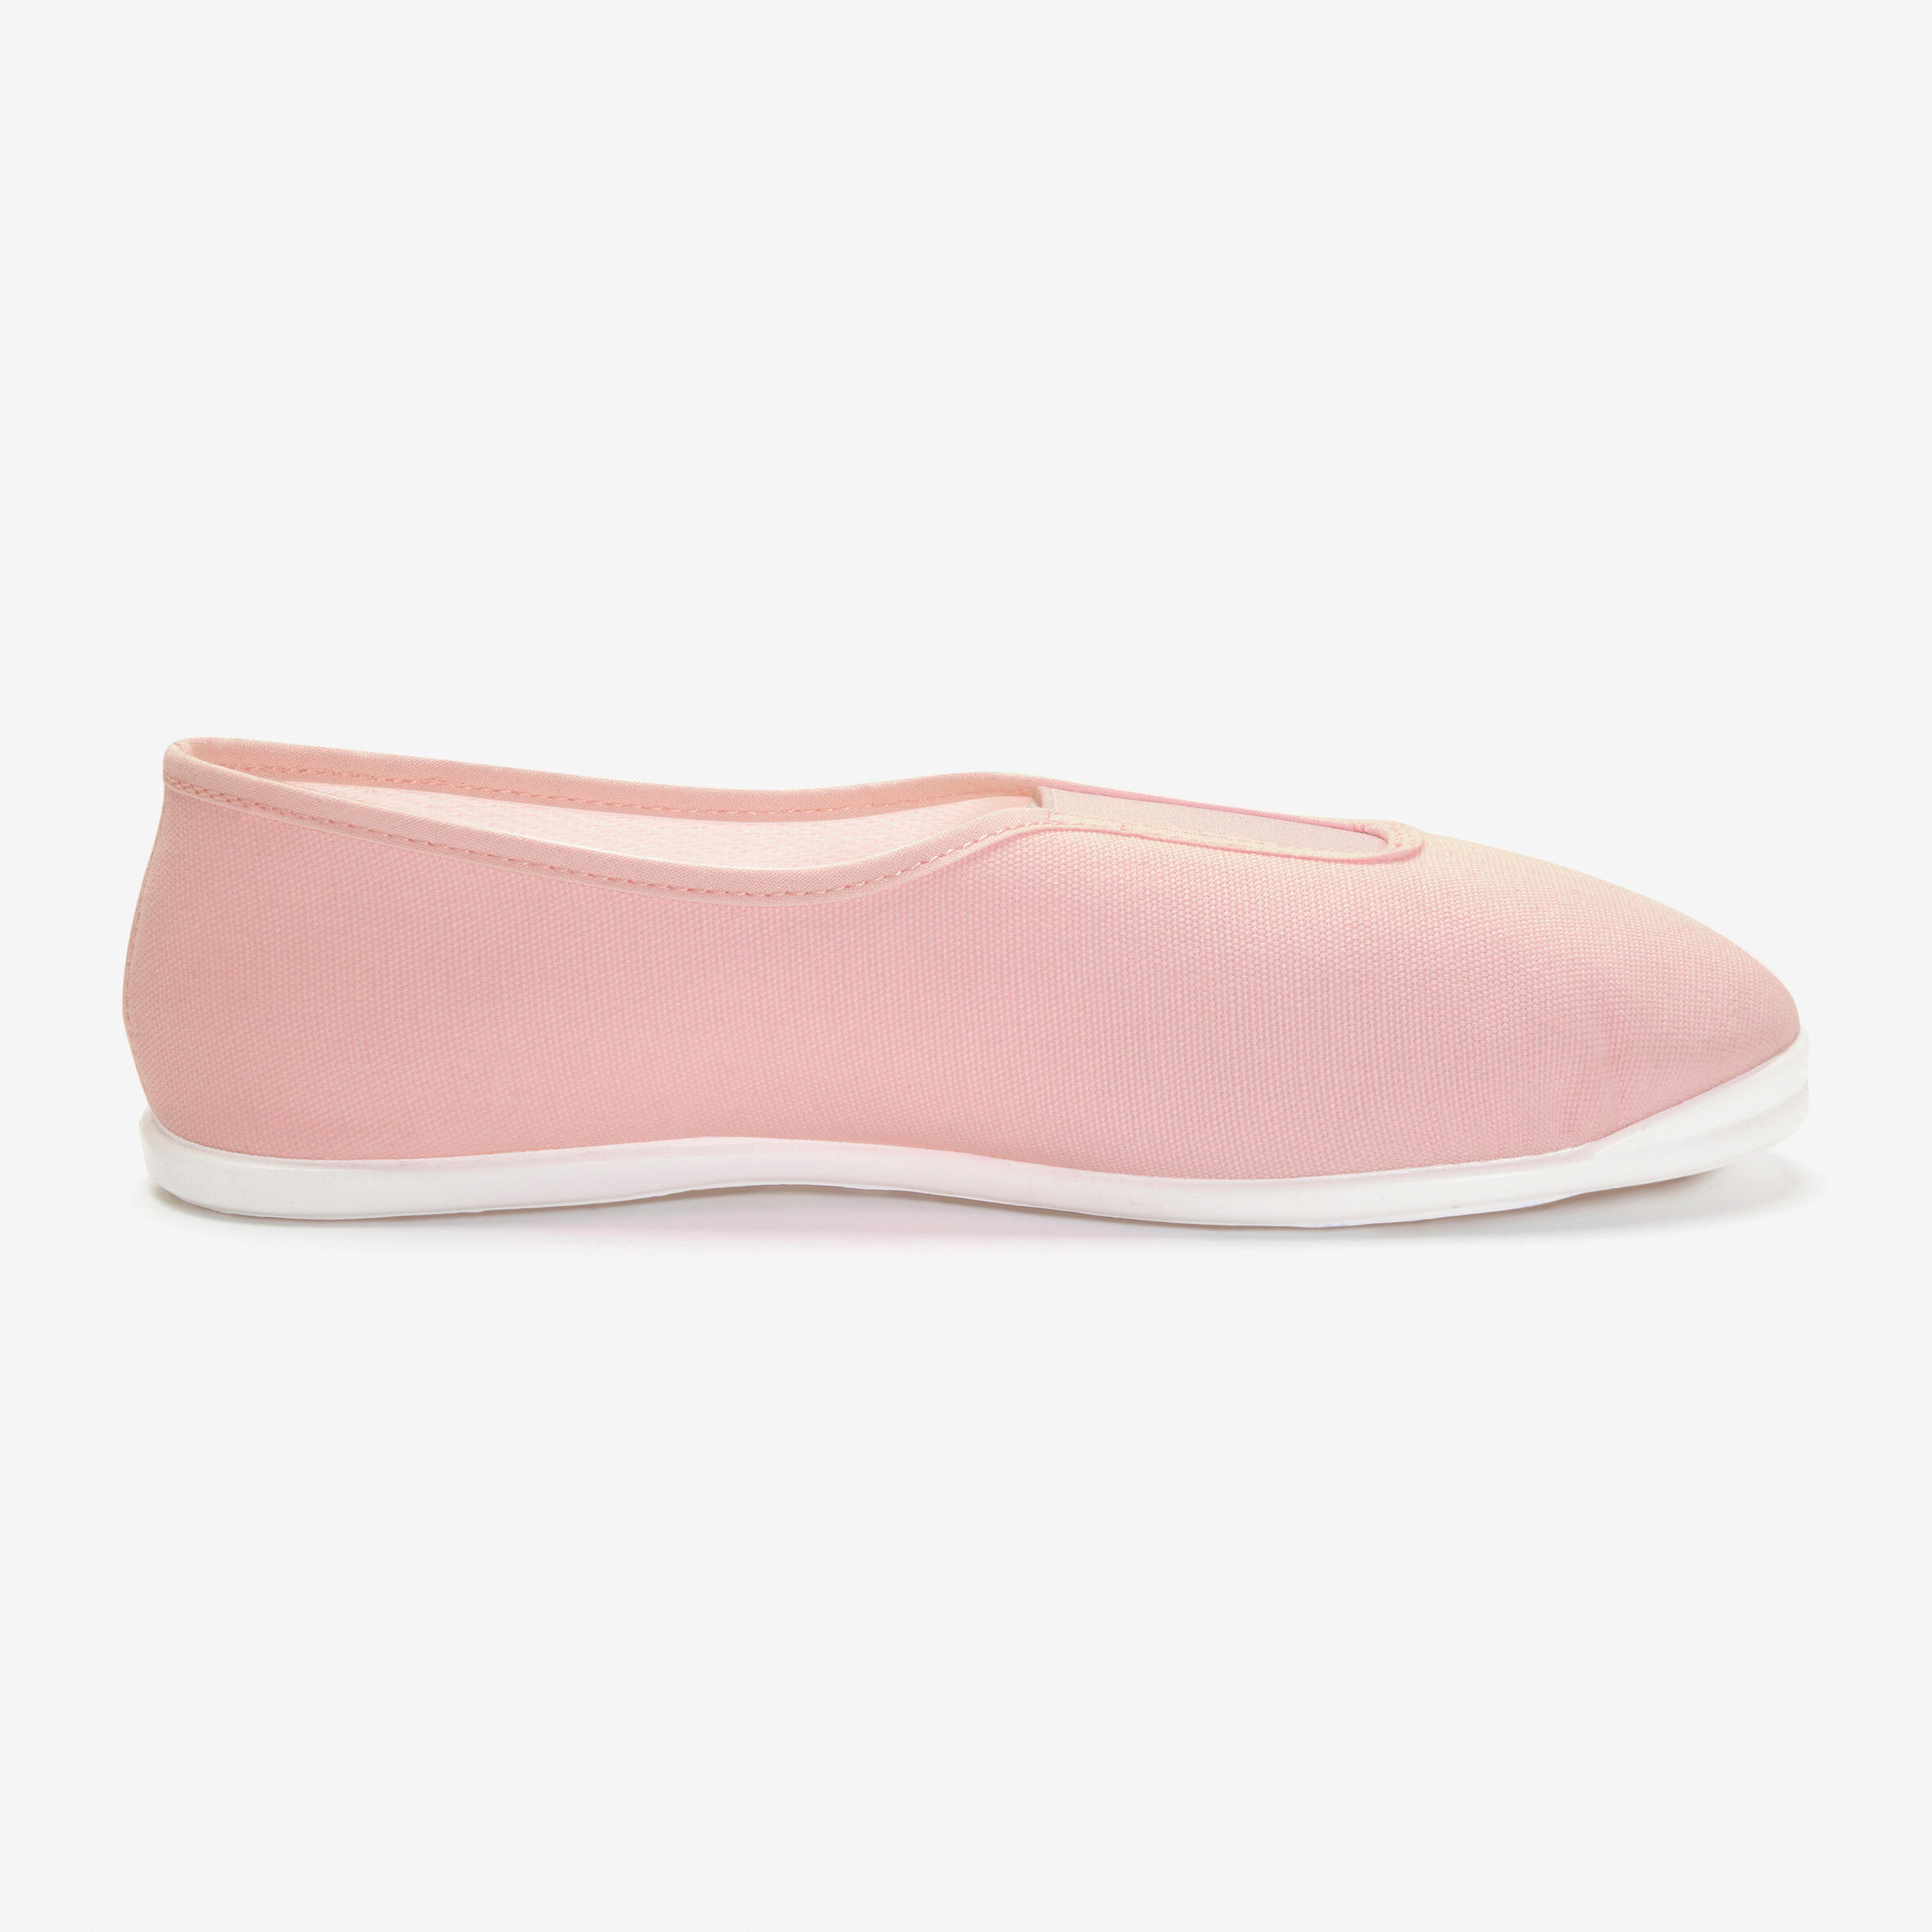 Girls'/Boys' Fabric Gymnastics Shoes - Pink 4/5